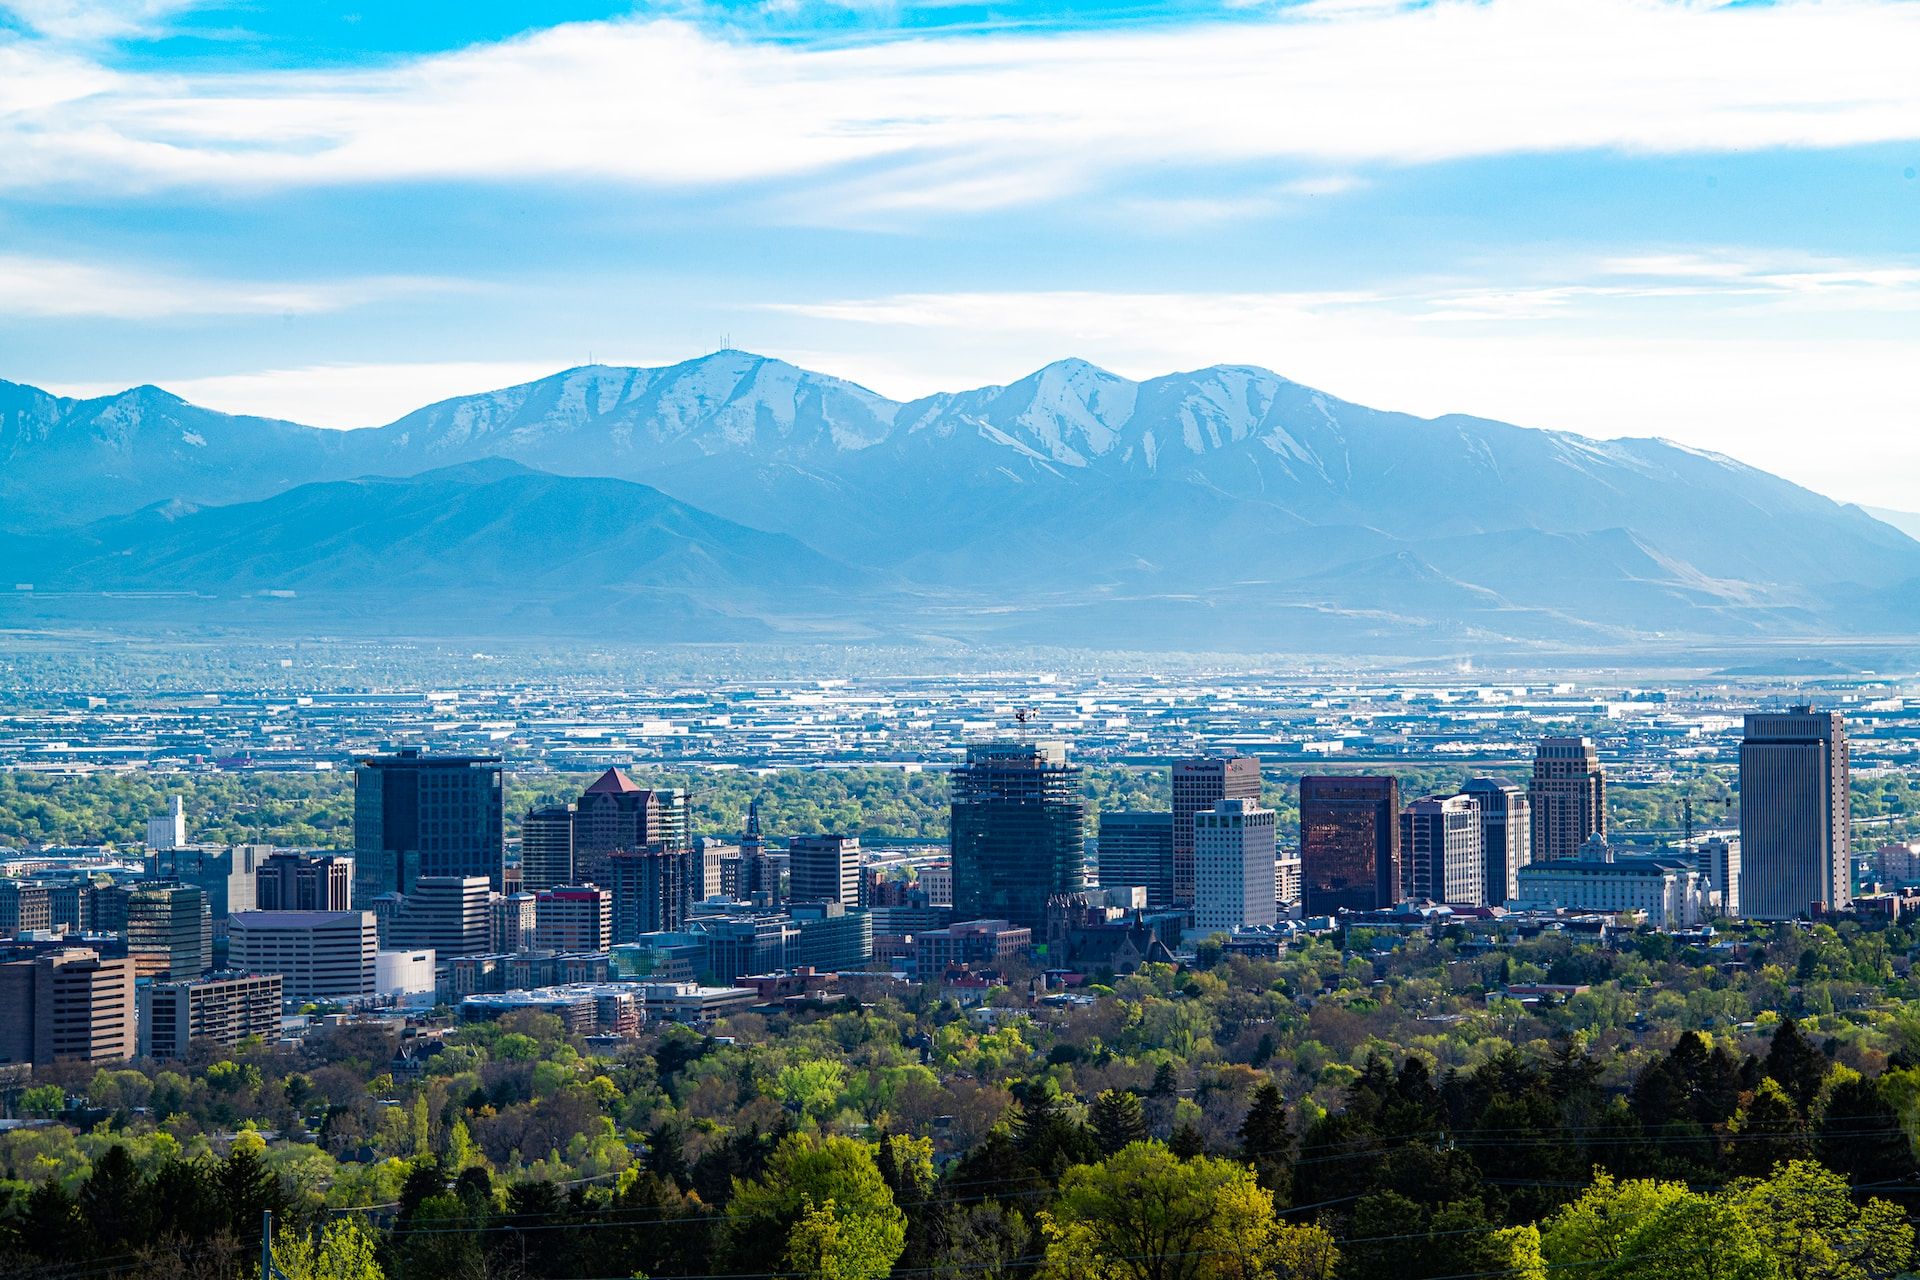 Salt Lake City, Utah skyline with mountain backdrop